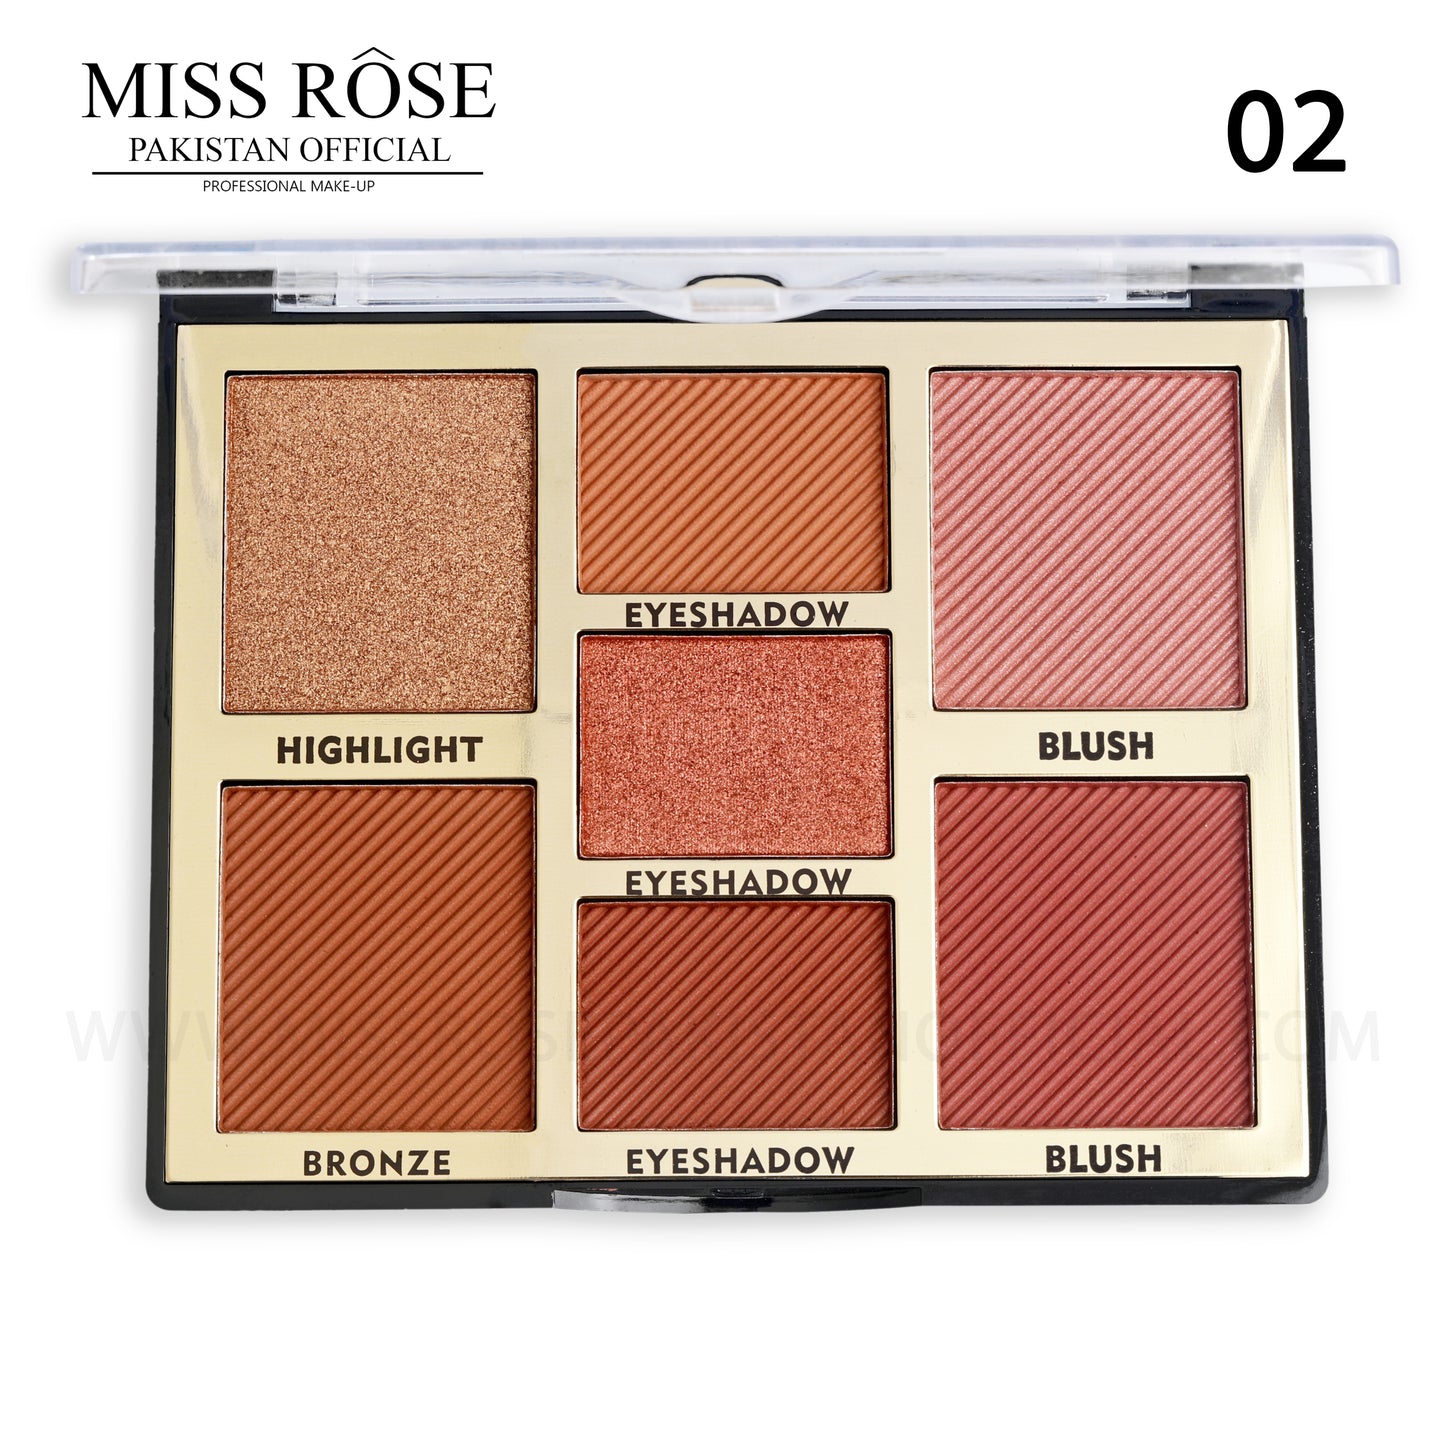 Miss Rose 7 Color Face Palette